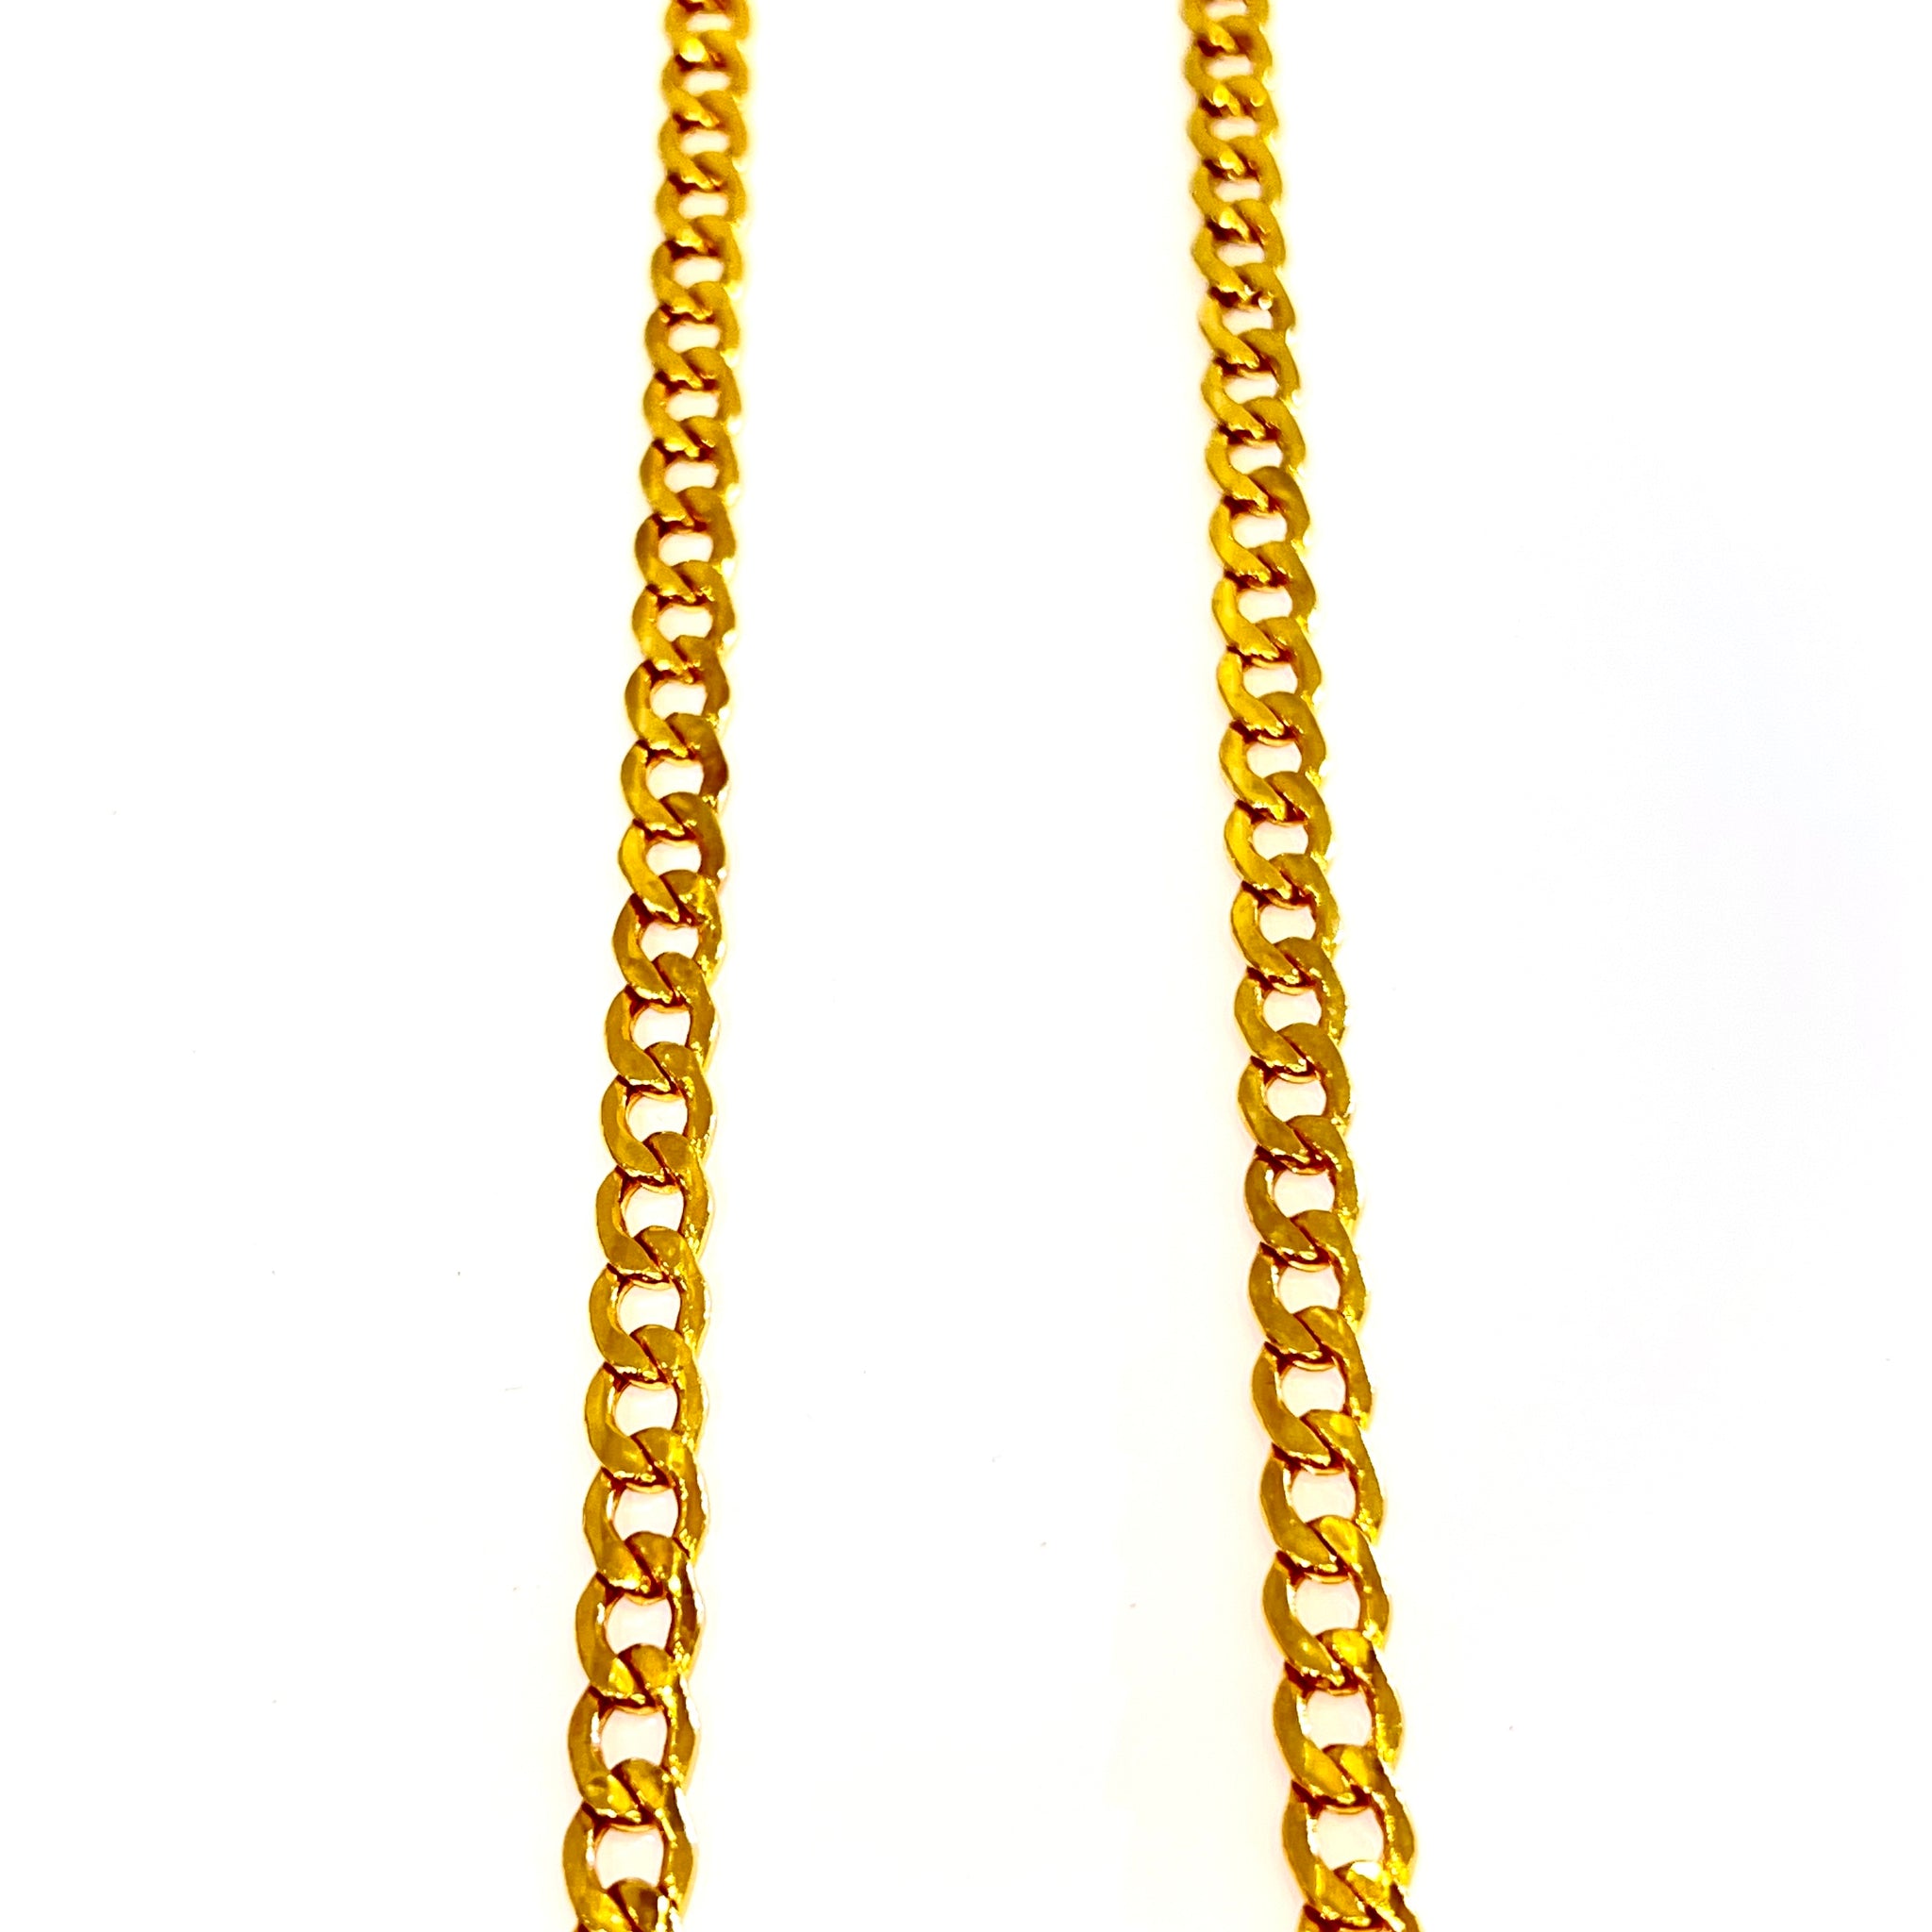 Cuban Link Chain - 14 carat gold - 60cm / 6mm